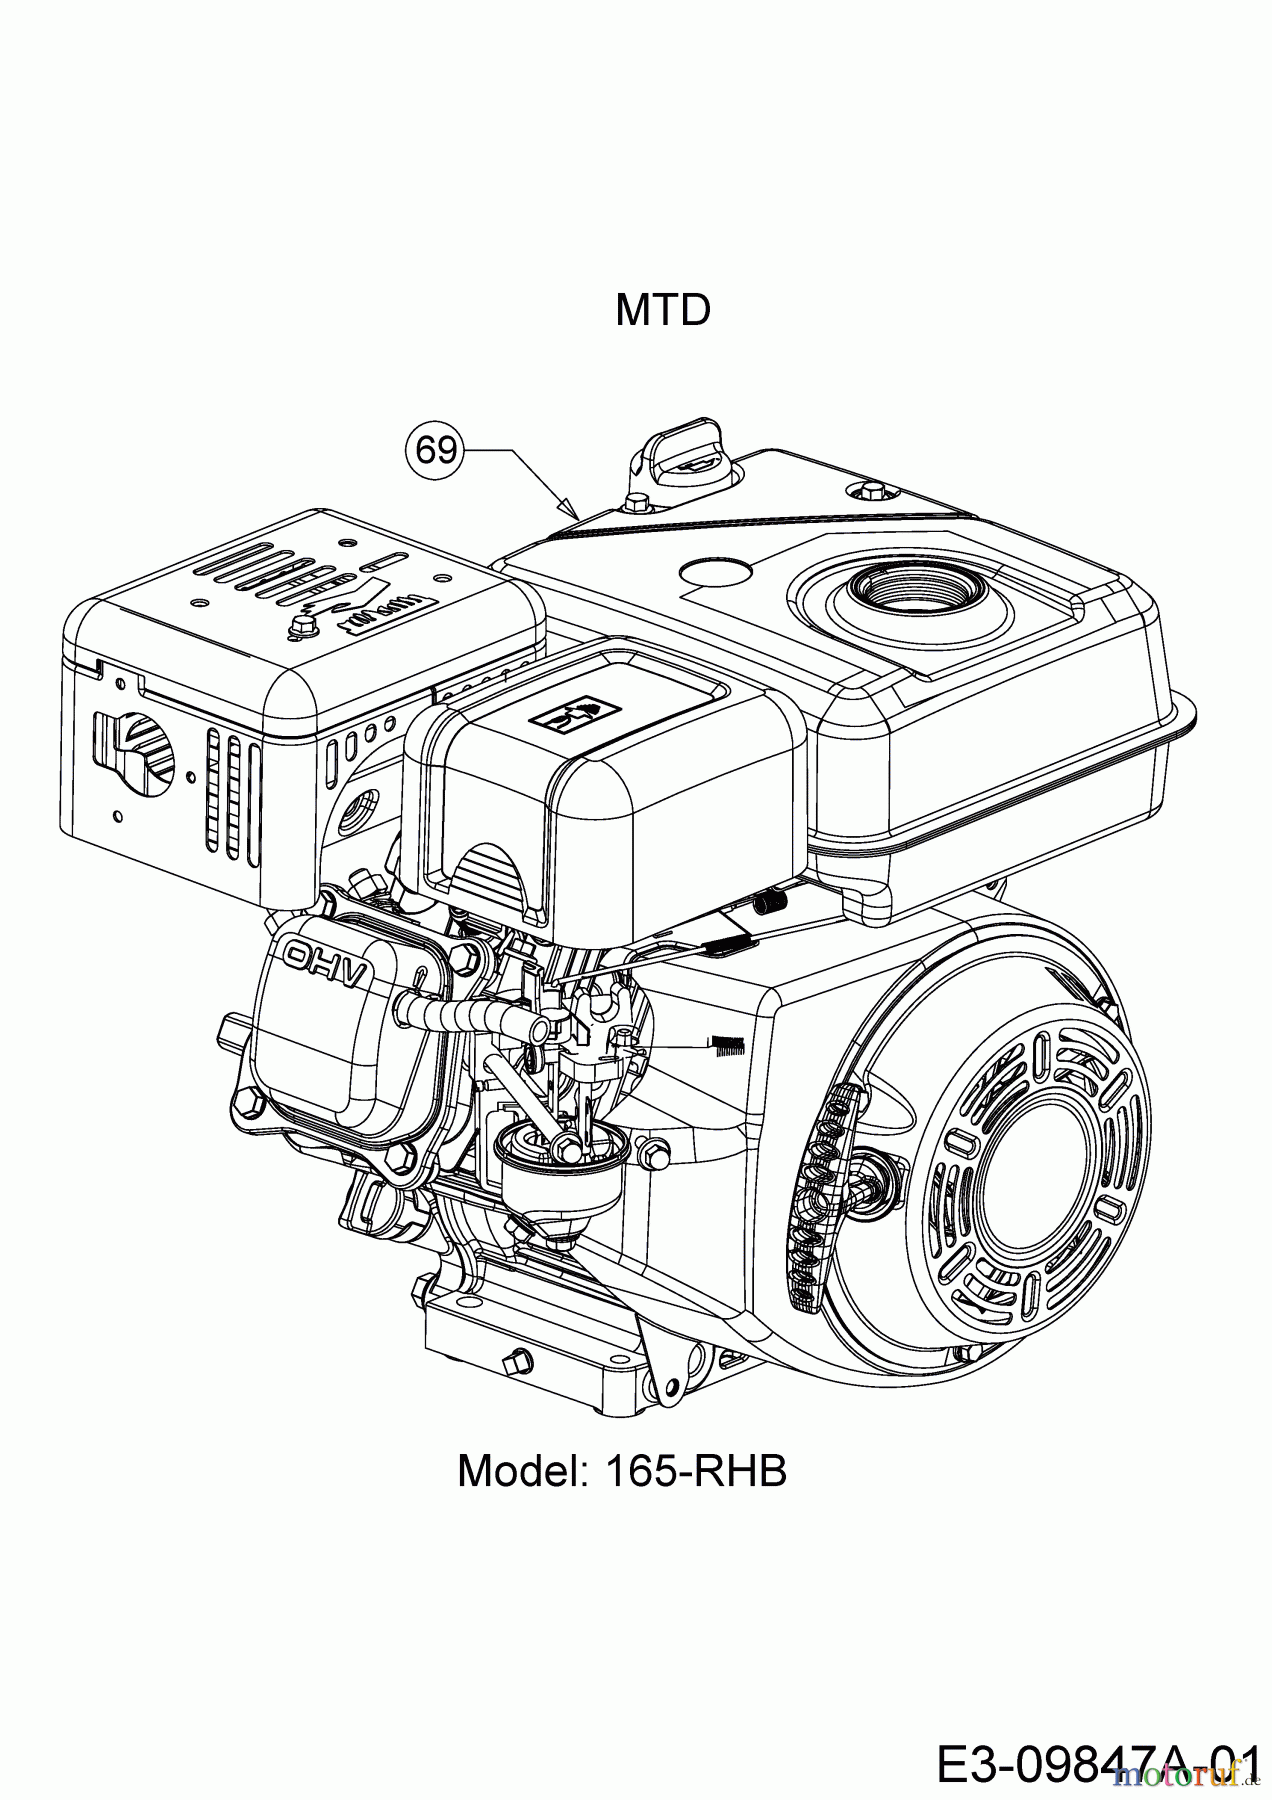  MTD Tillers T/380 M 21D-38MT678  (2018) Engine MTD